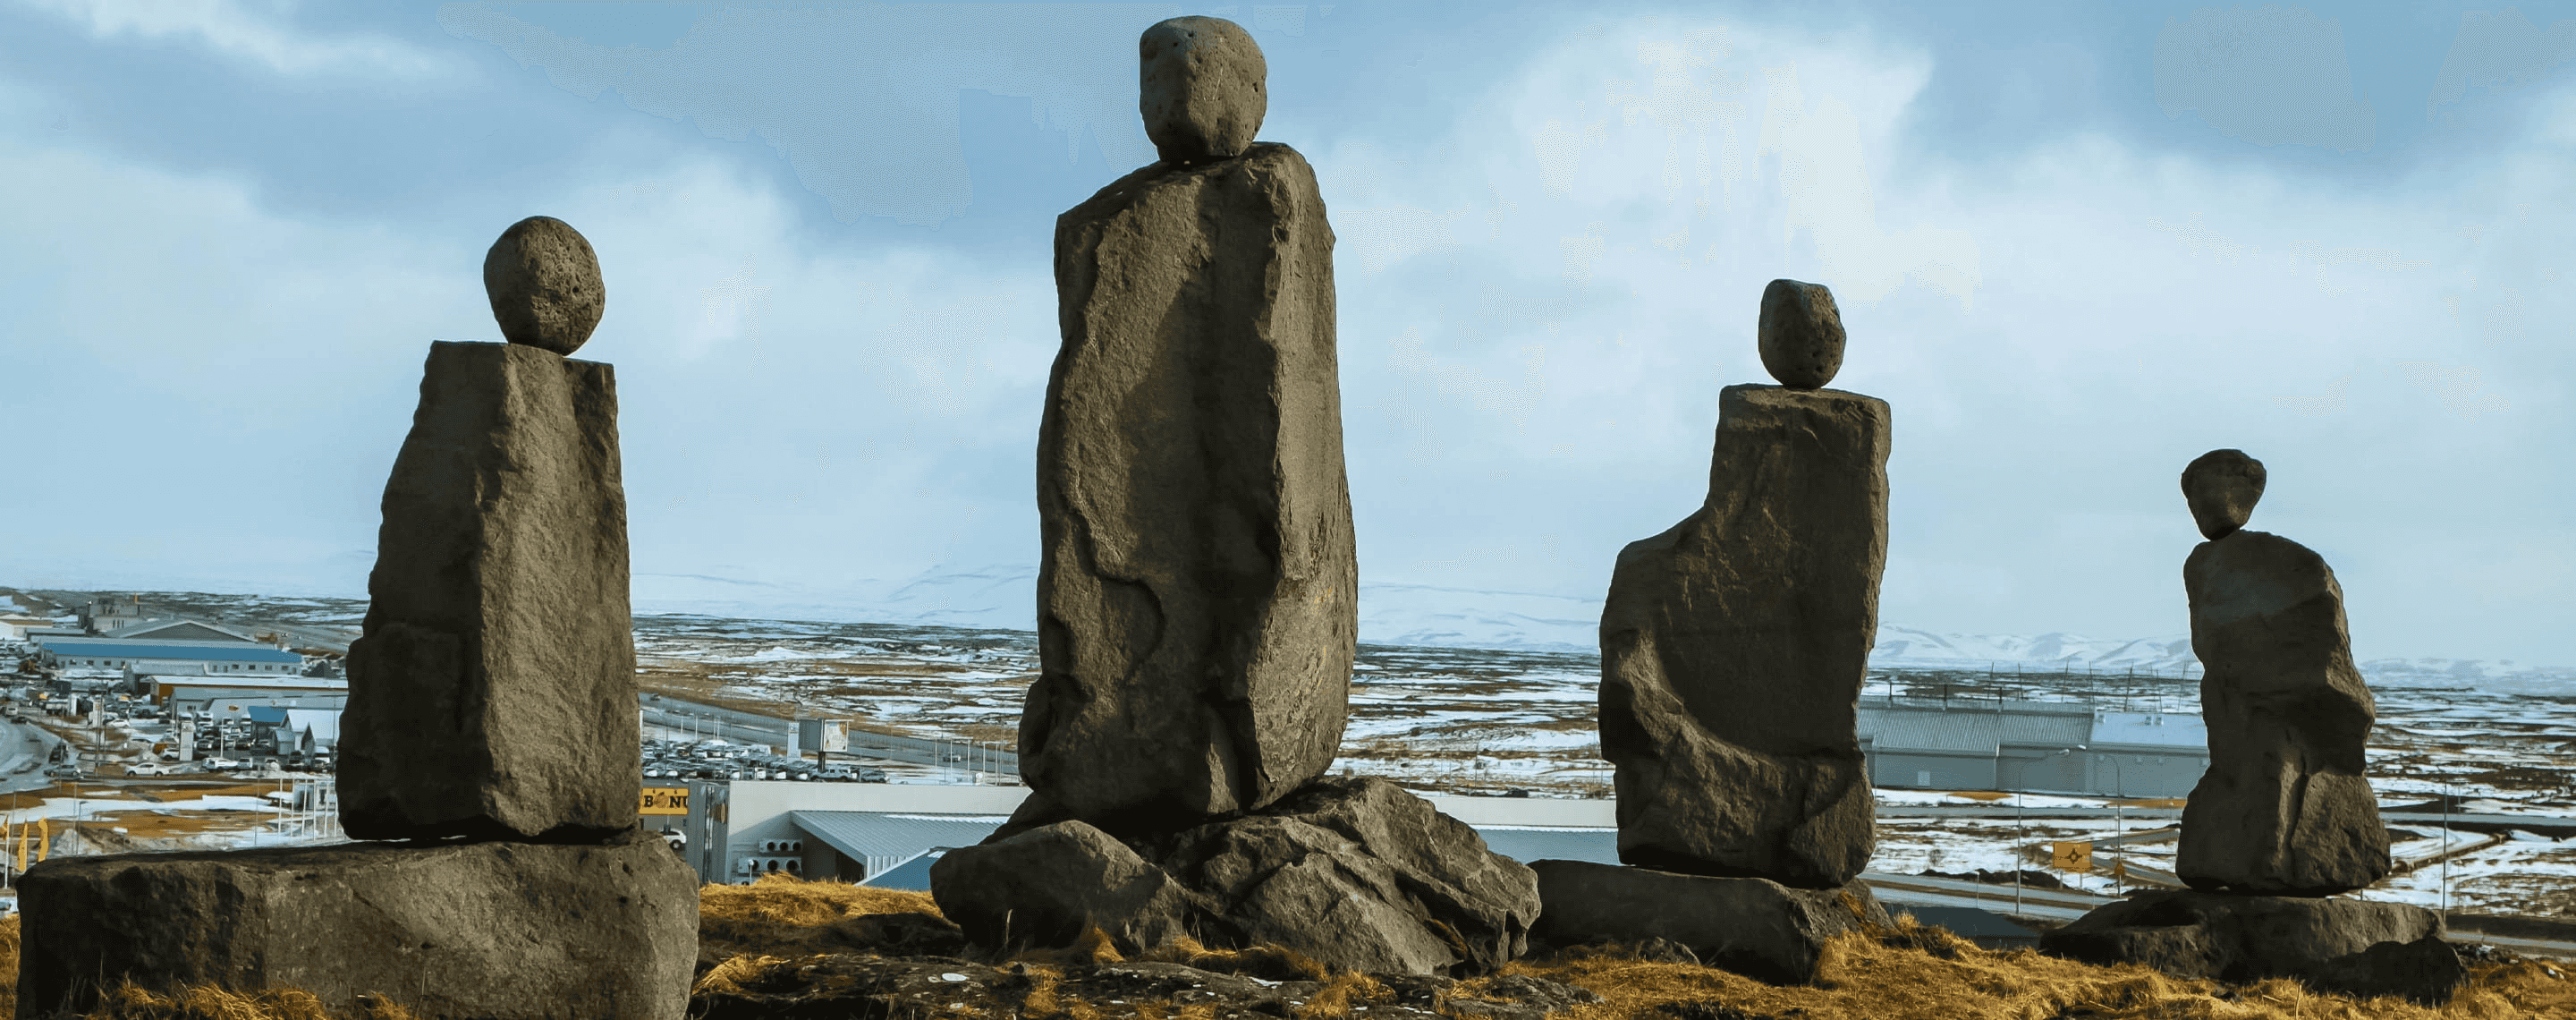 Steinskulpturen in Keflavik, Island